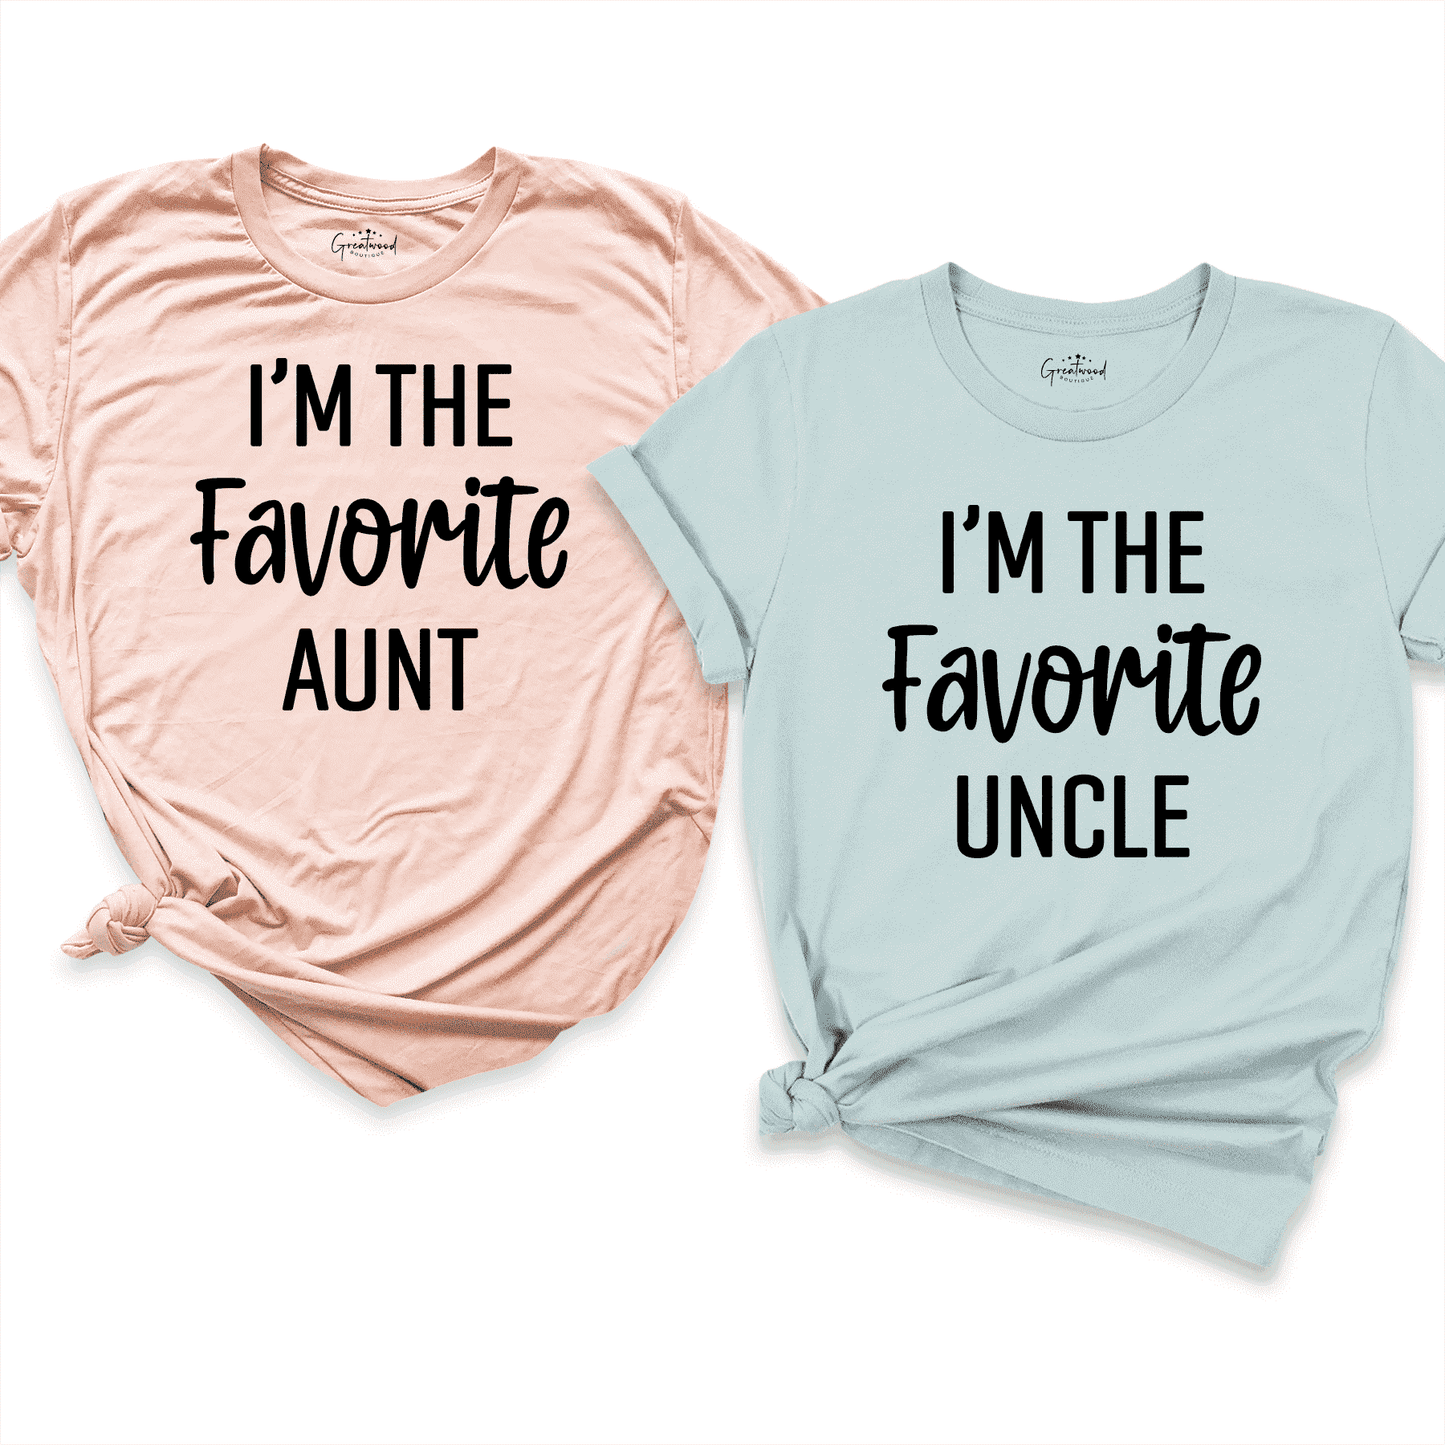 I'm The Favorite Aunt & Uncle Shirt Peach - Greatwood Boutique